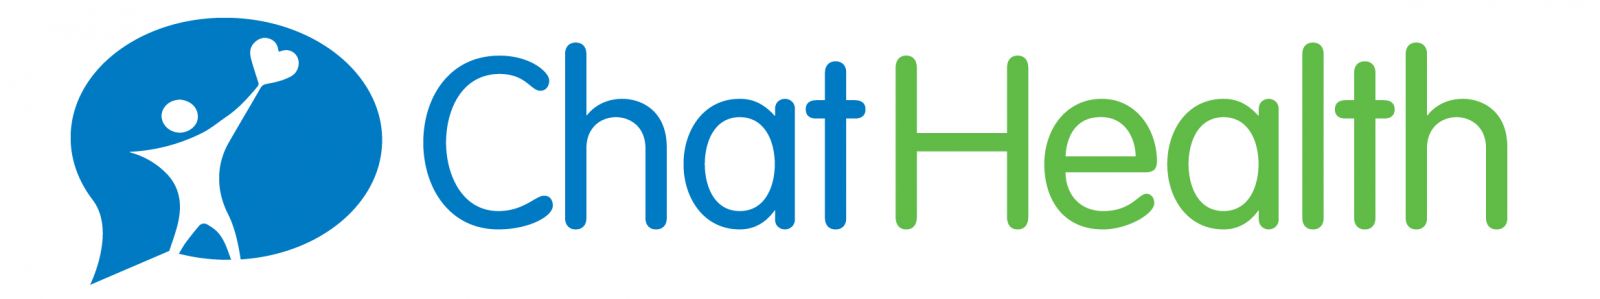 chathealth logo